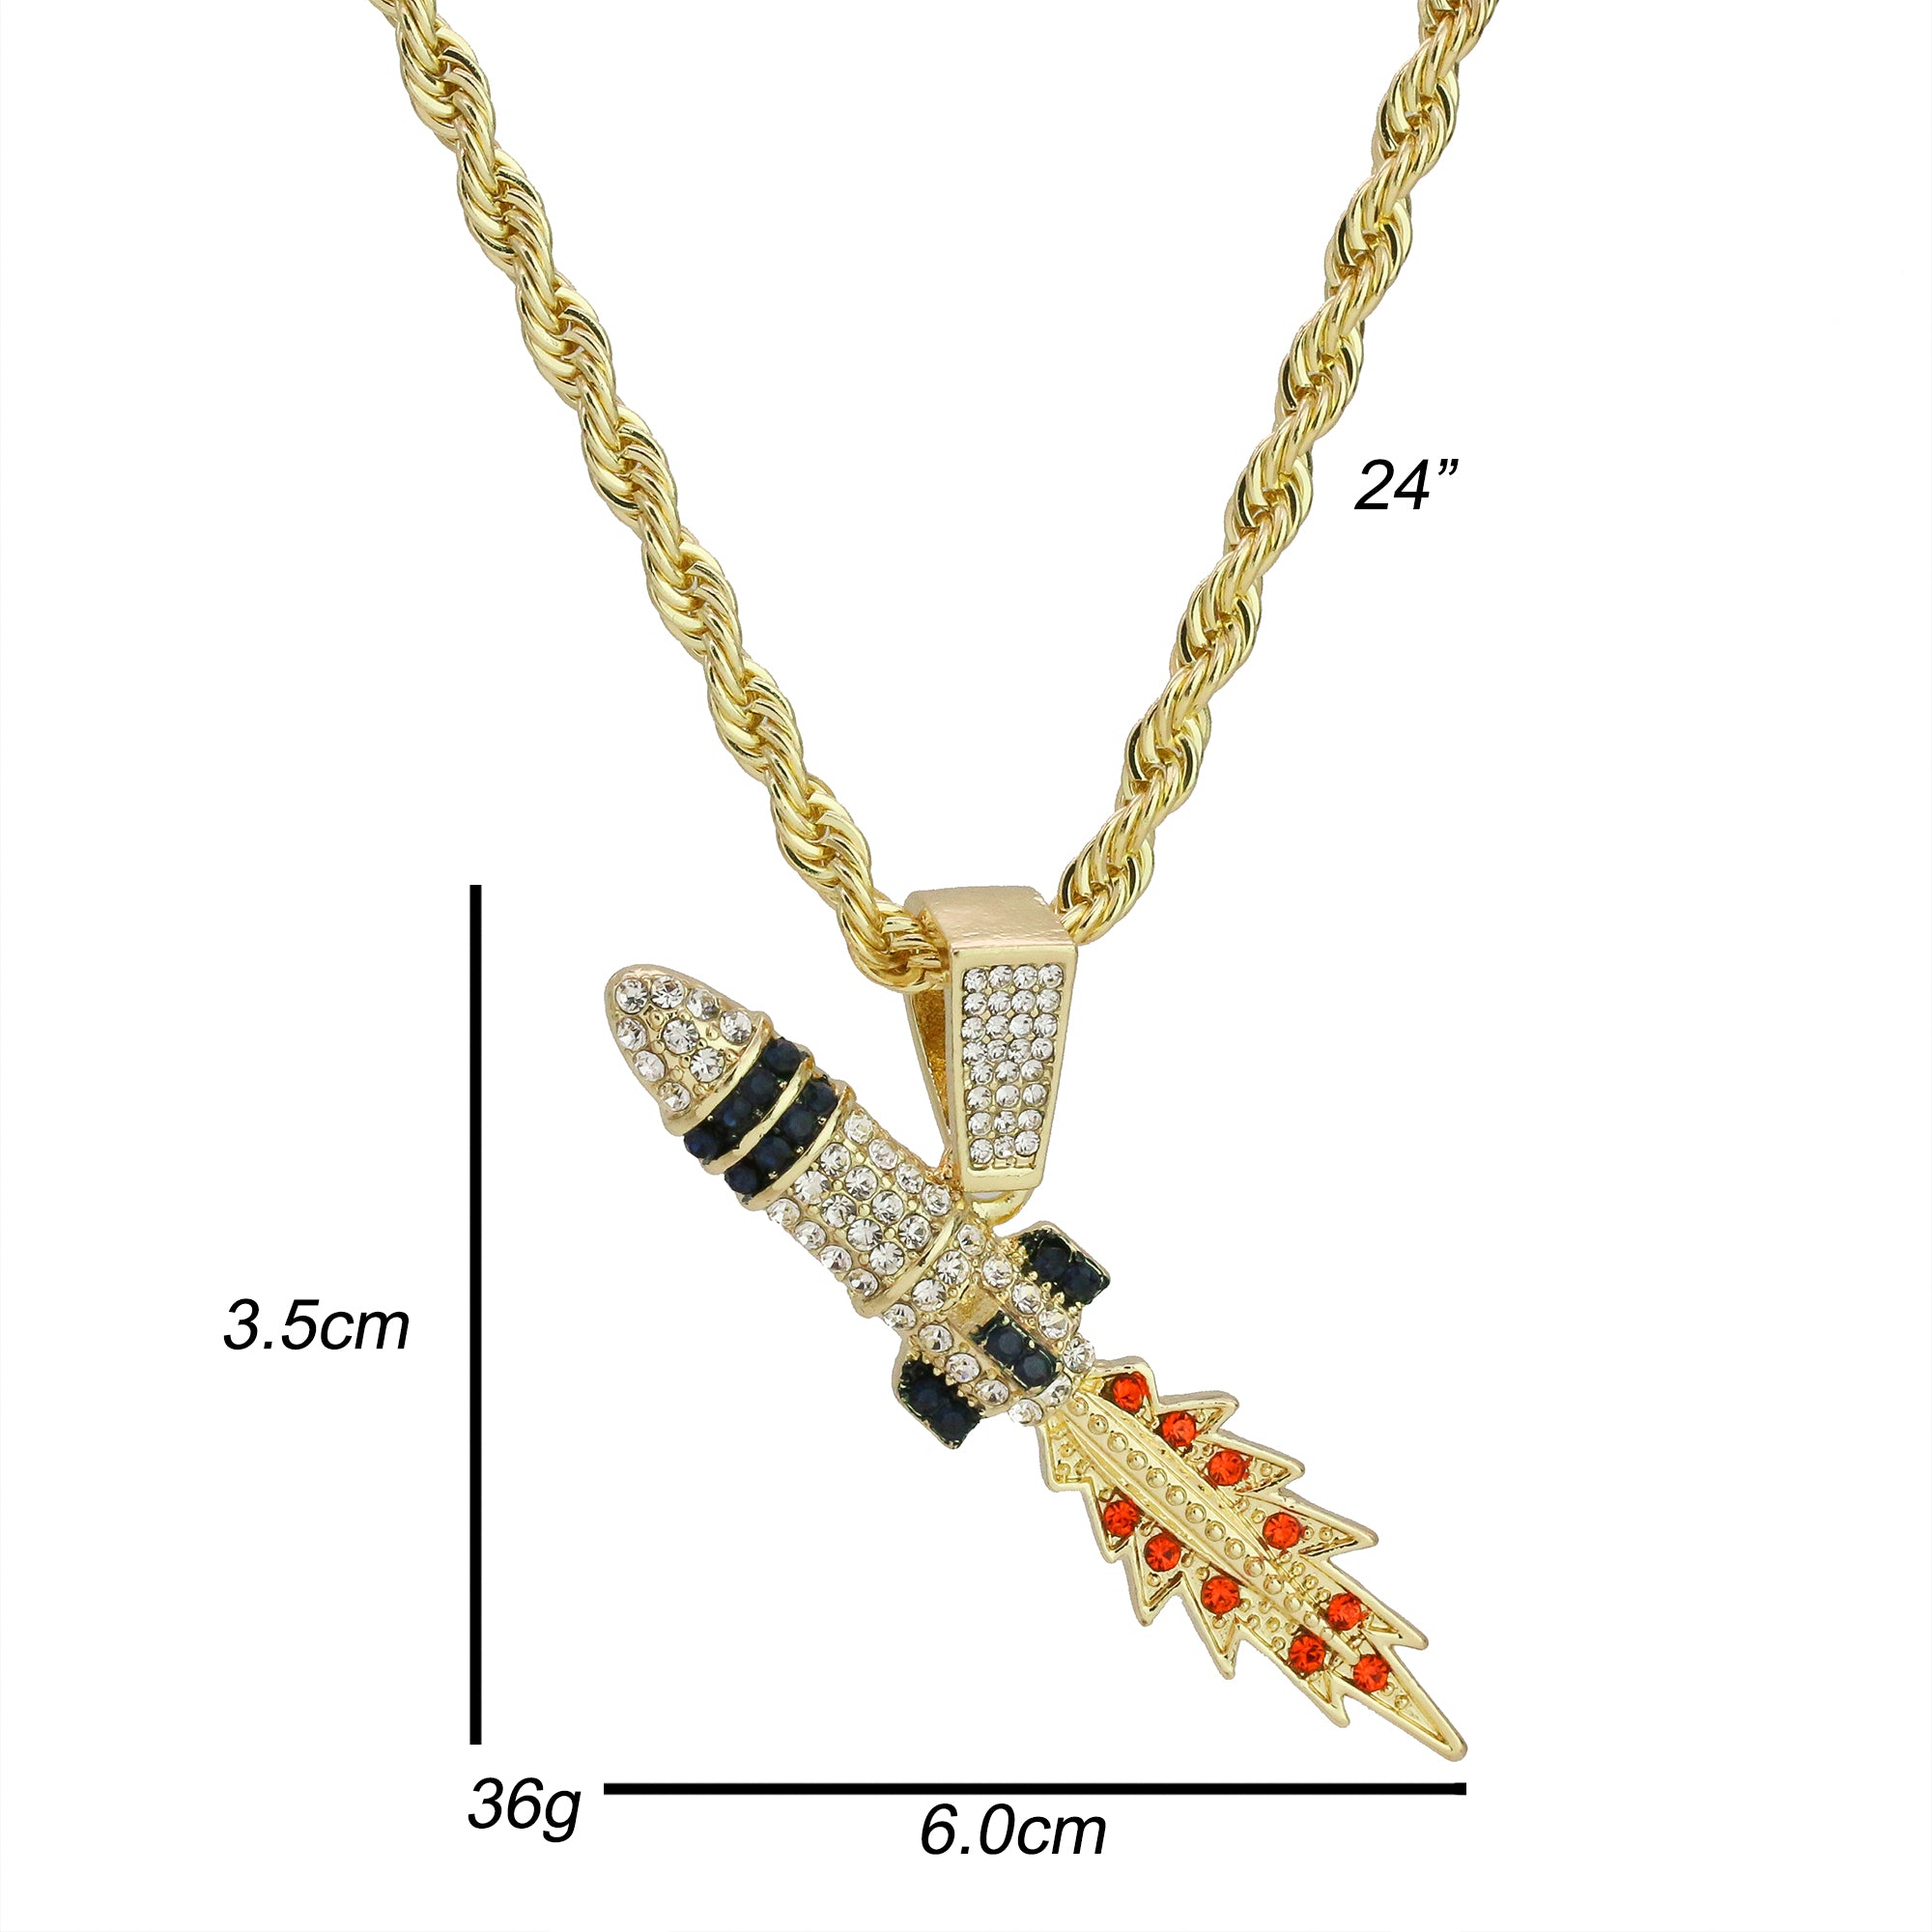 Exquisite Take Off Rocket Pendant Rope Chain Men's Hip Hop 18k Cz Jewelry